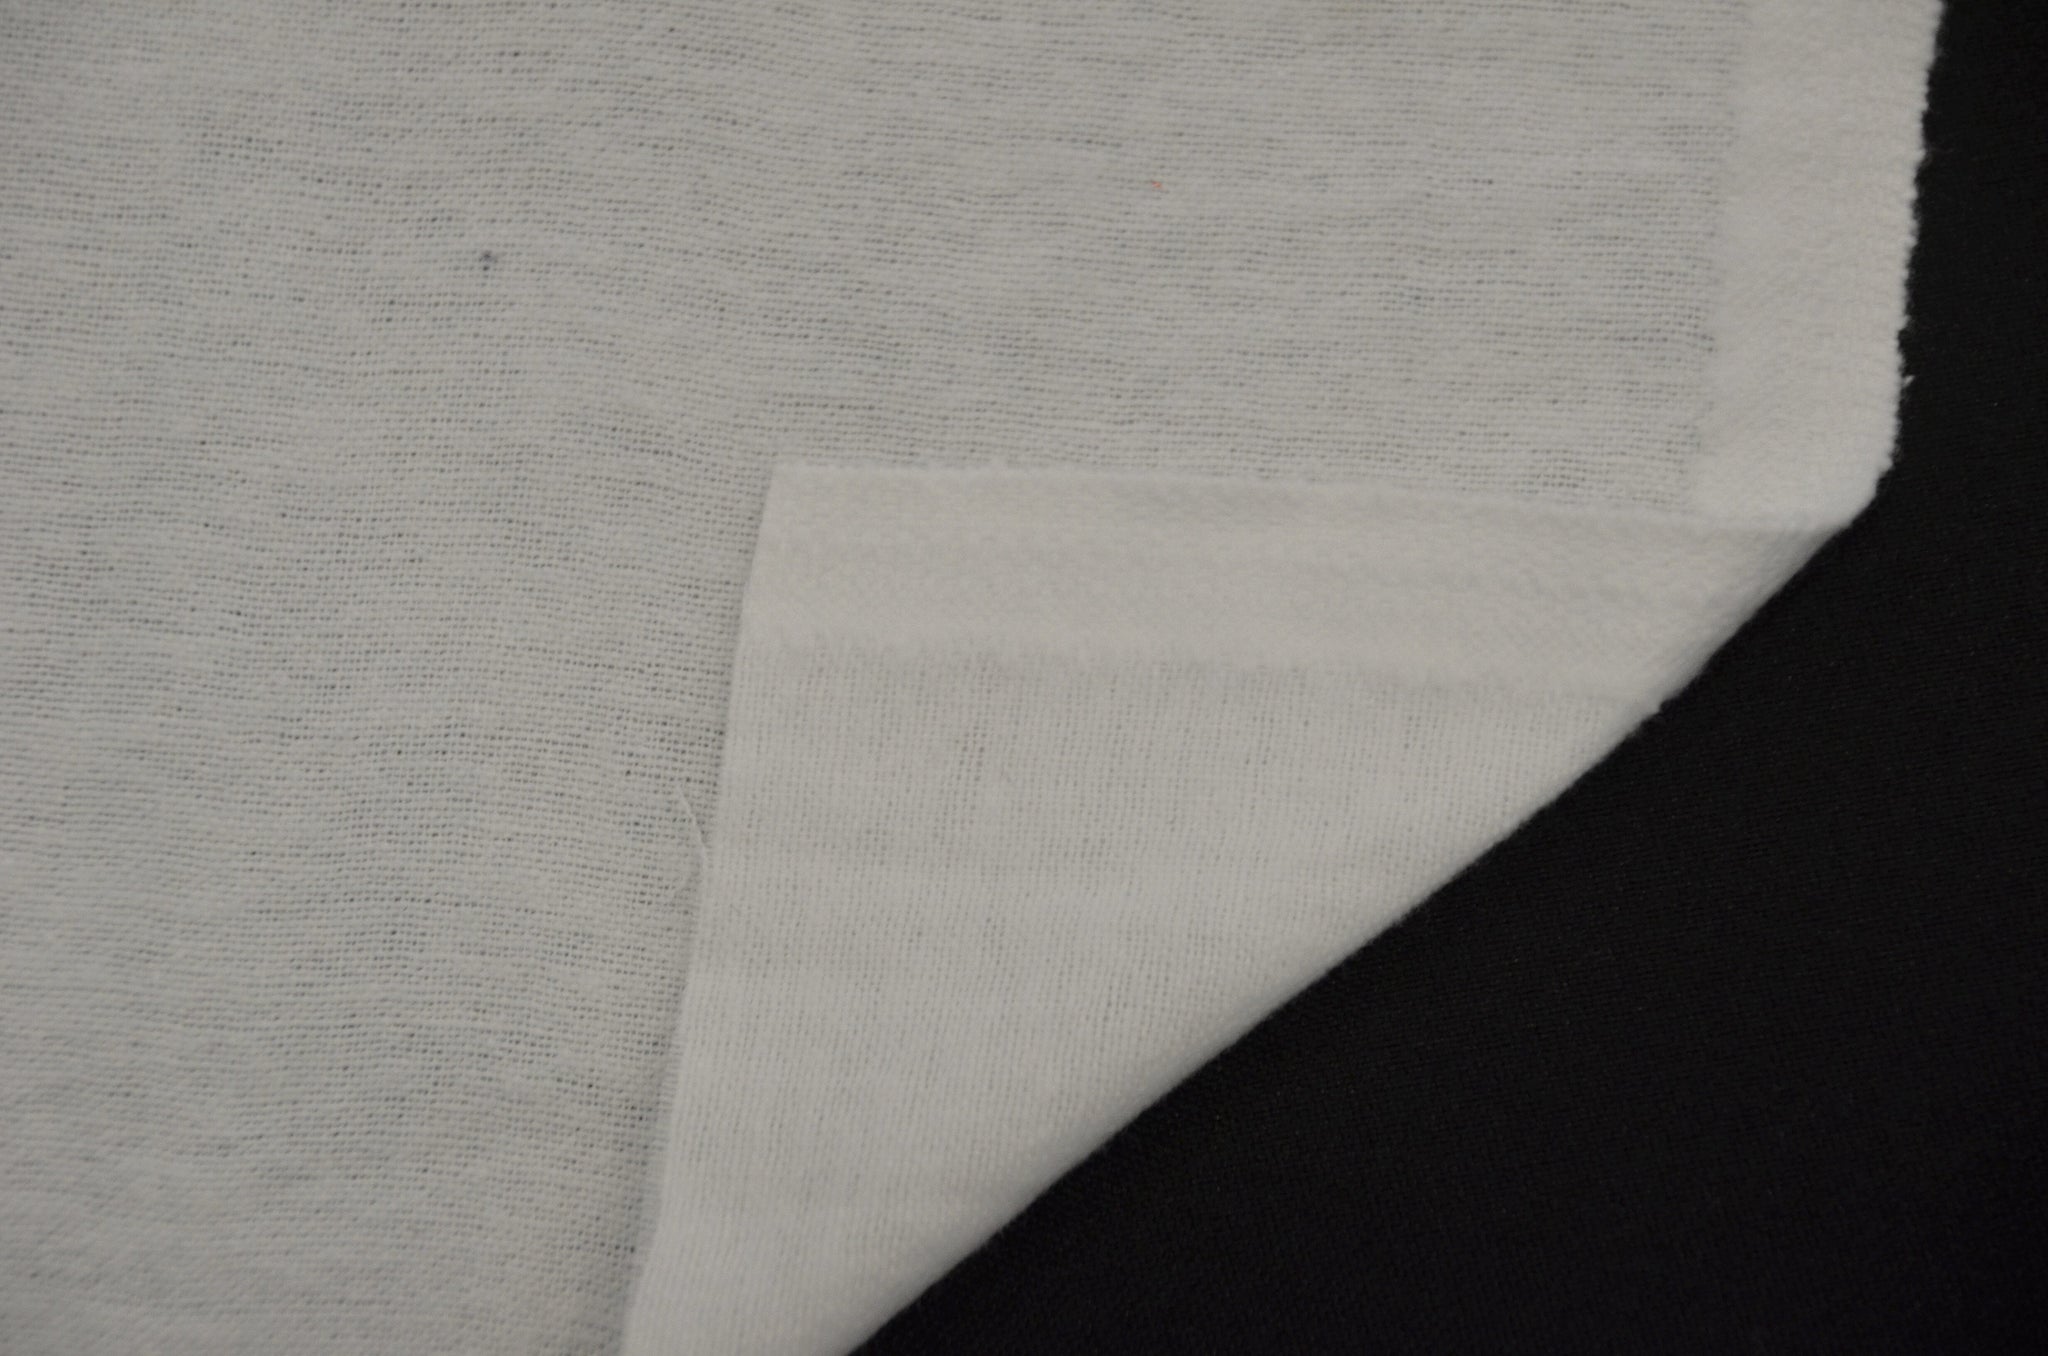 White 100% Cotton Terry Cloth 46W > Cotton Fabric > Fabric Mart